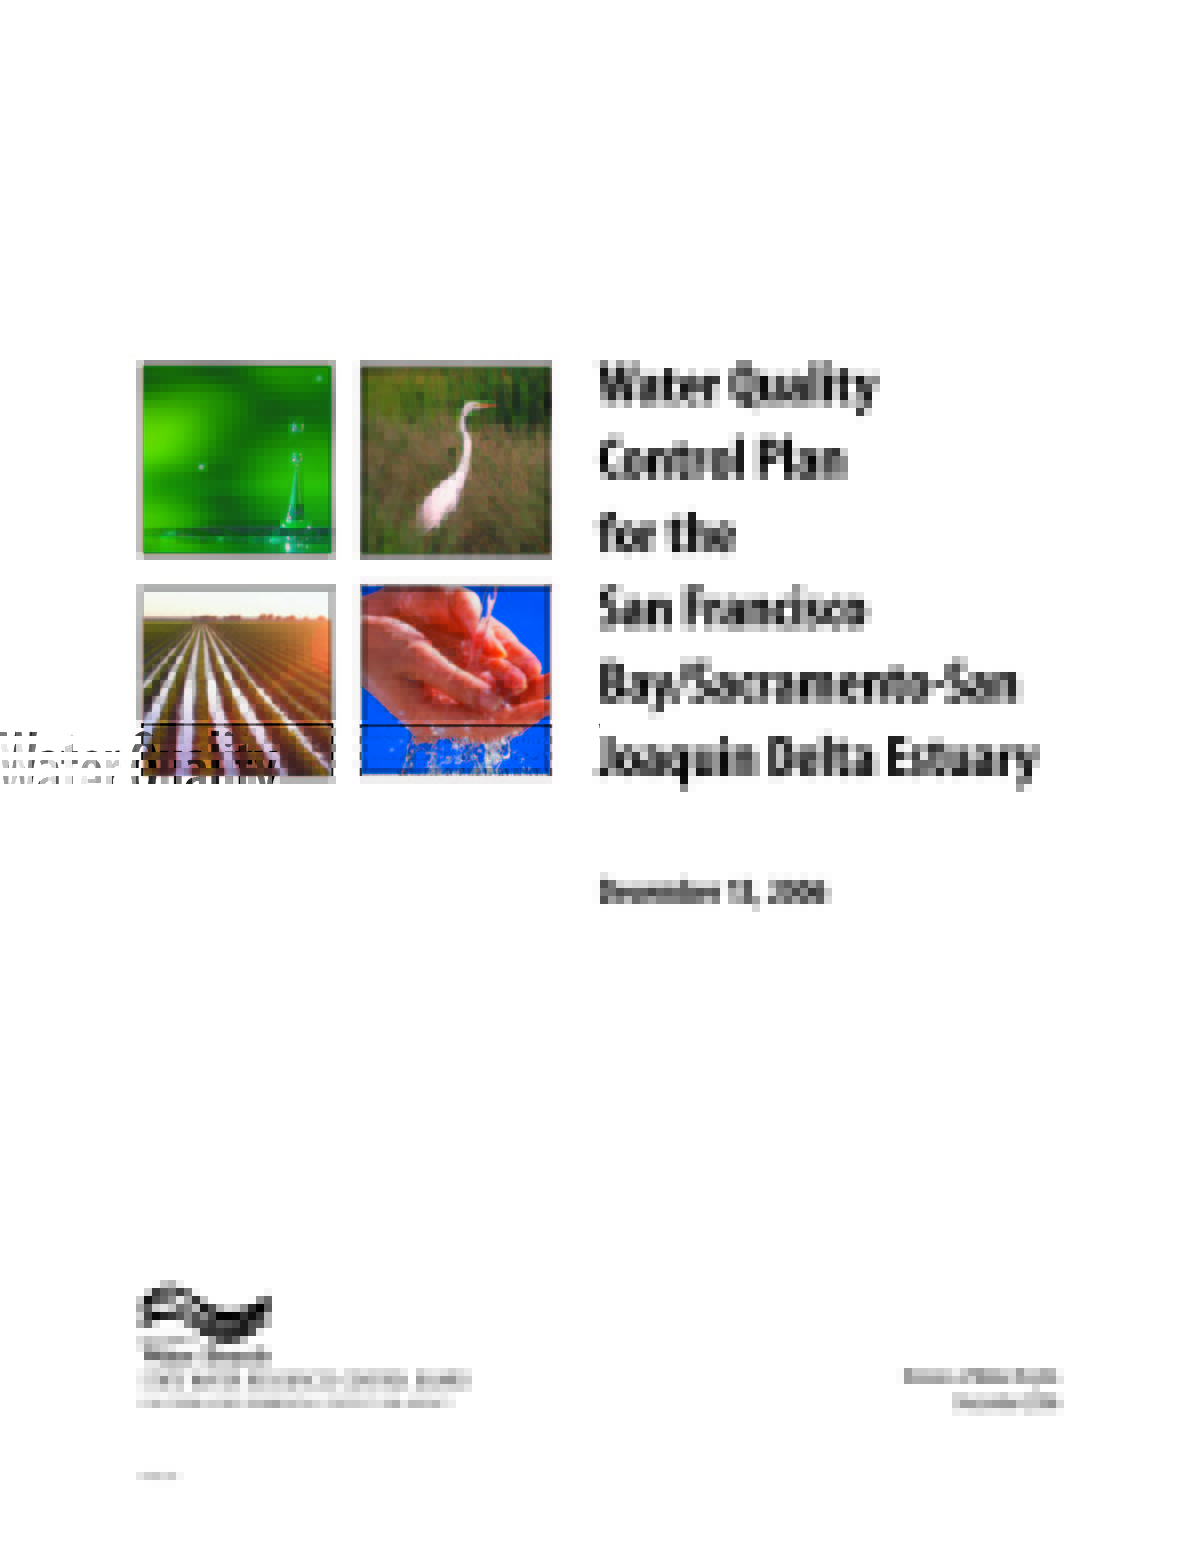 Bay Delta Water Quality Control Plan (Bay Delta Plan)